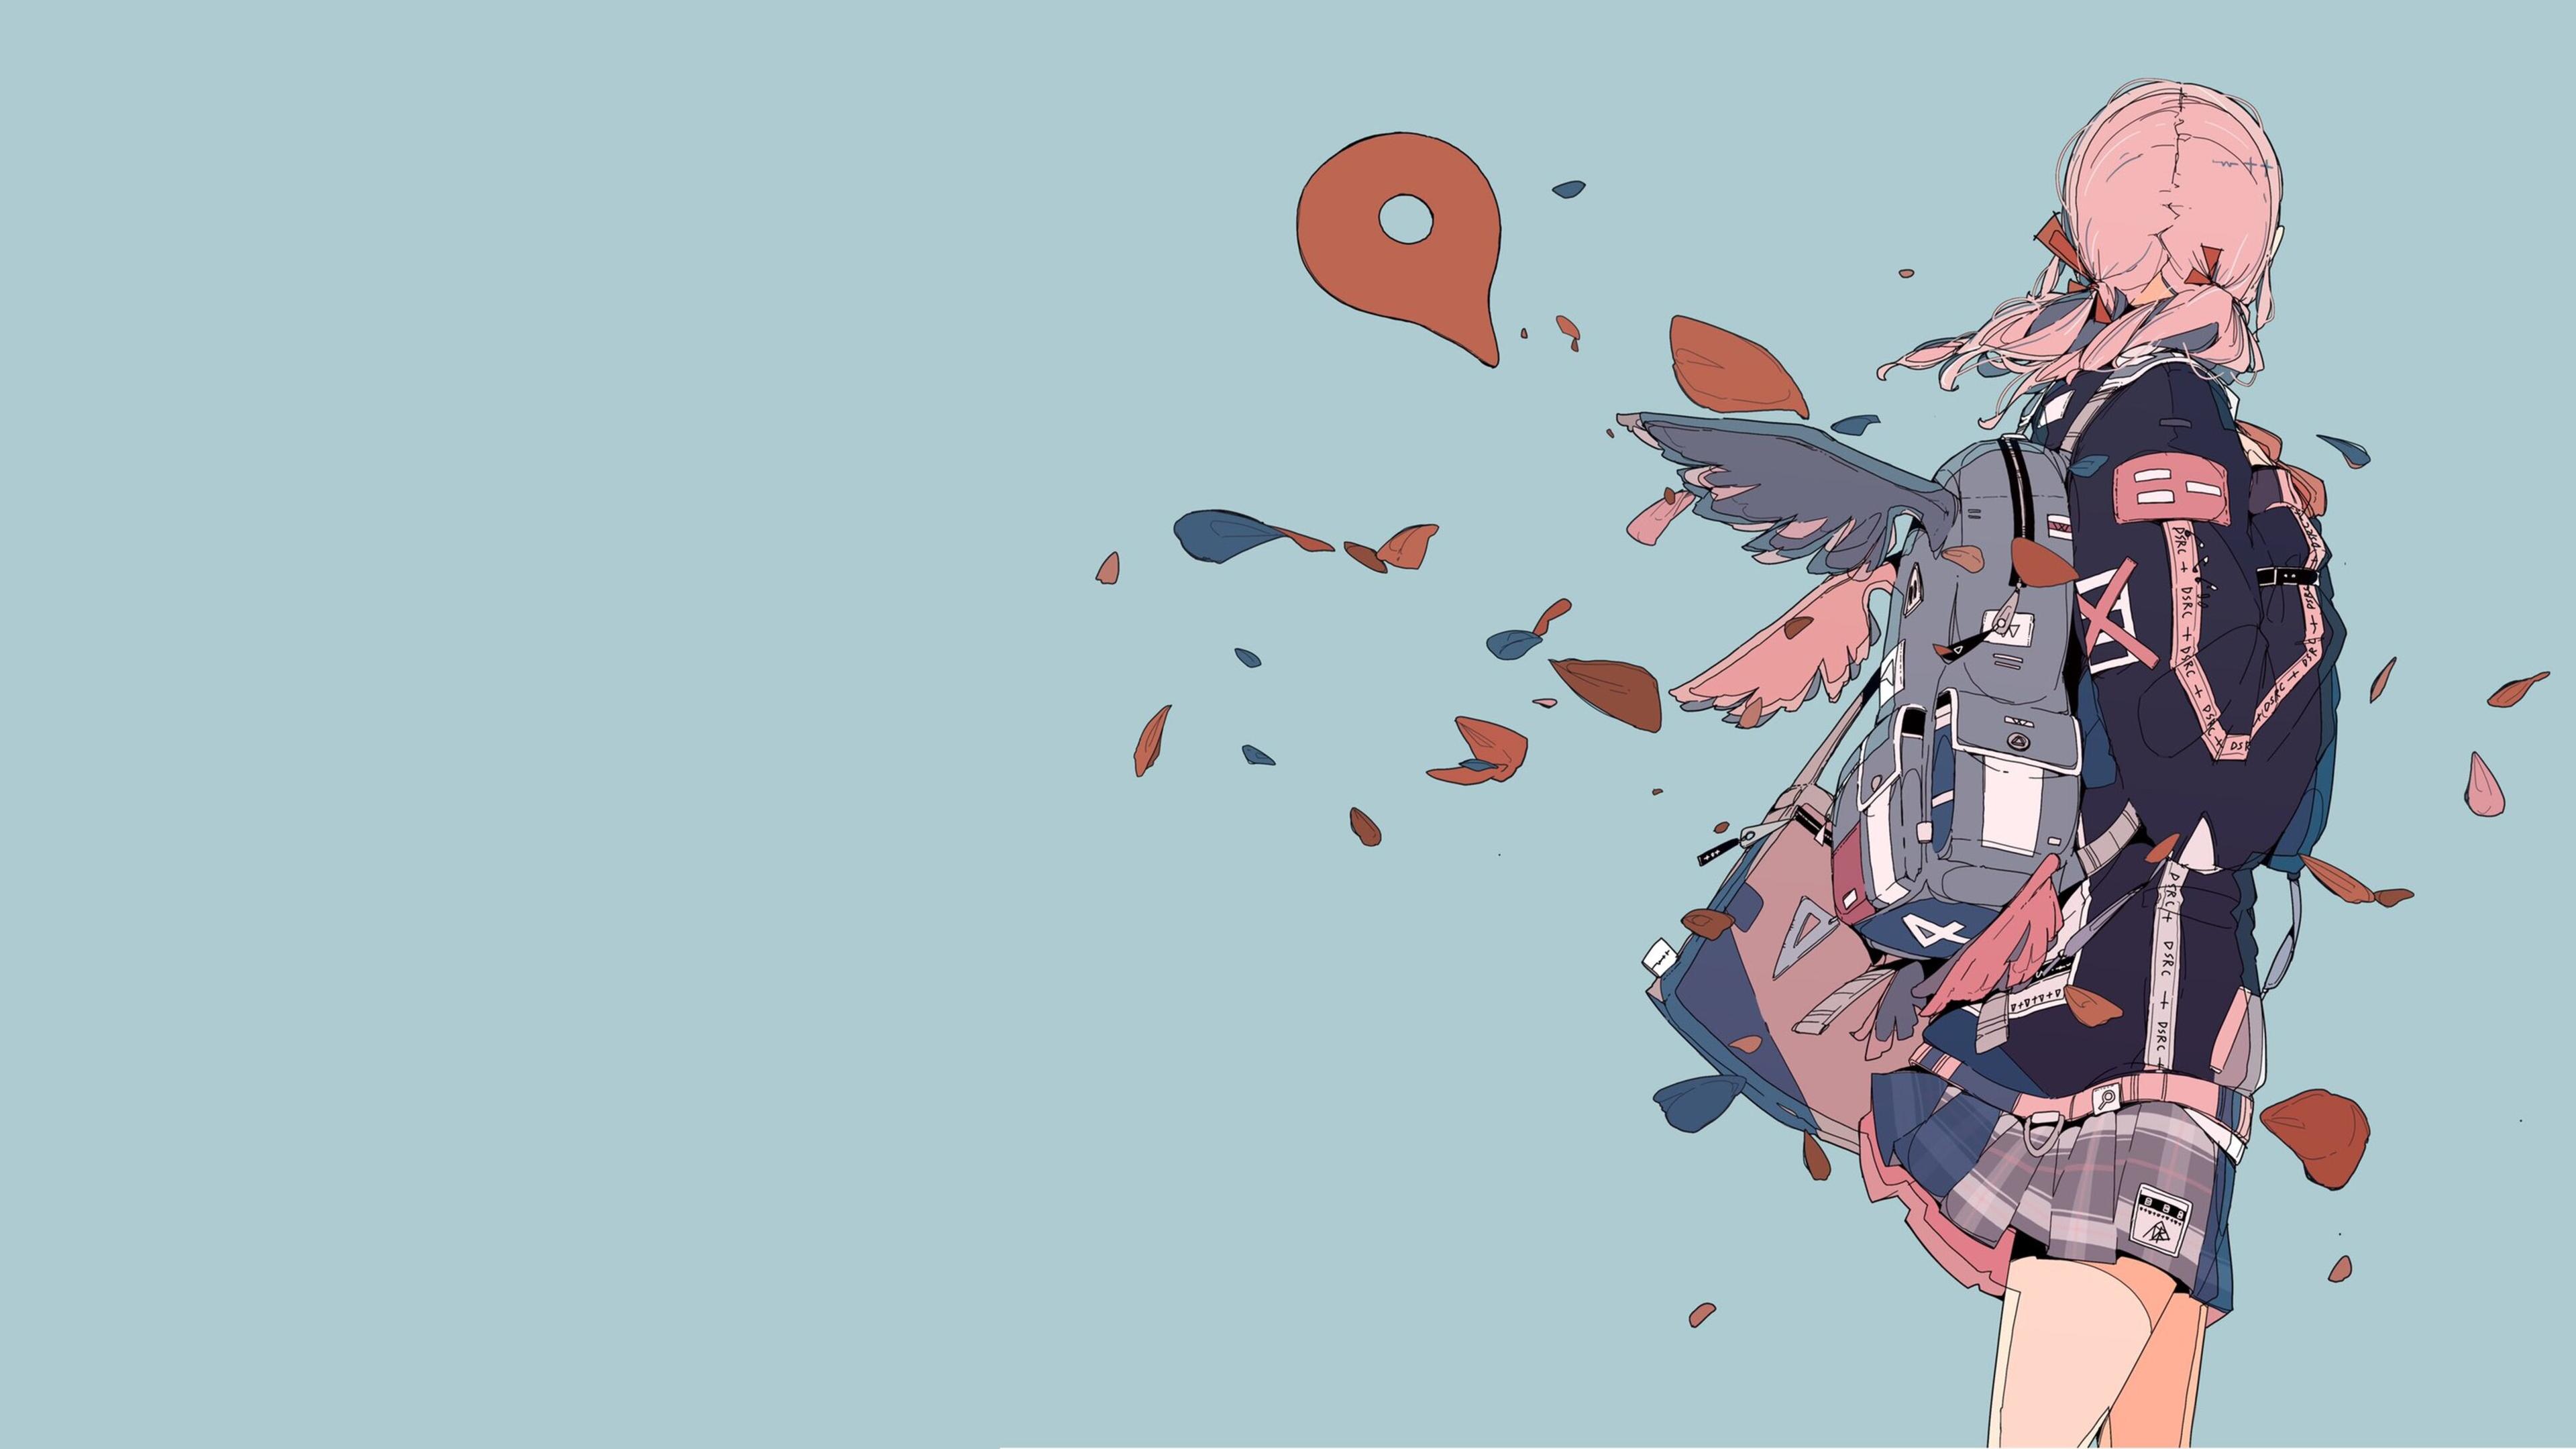 Anime 3840x2160 daisukerichard anime girls original characters minimalism backpacks wings petals simple background